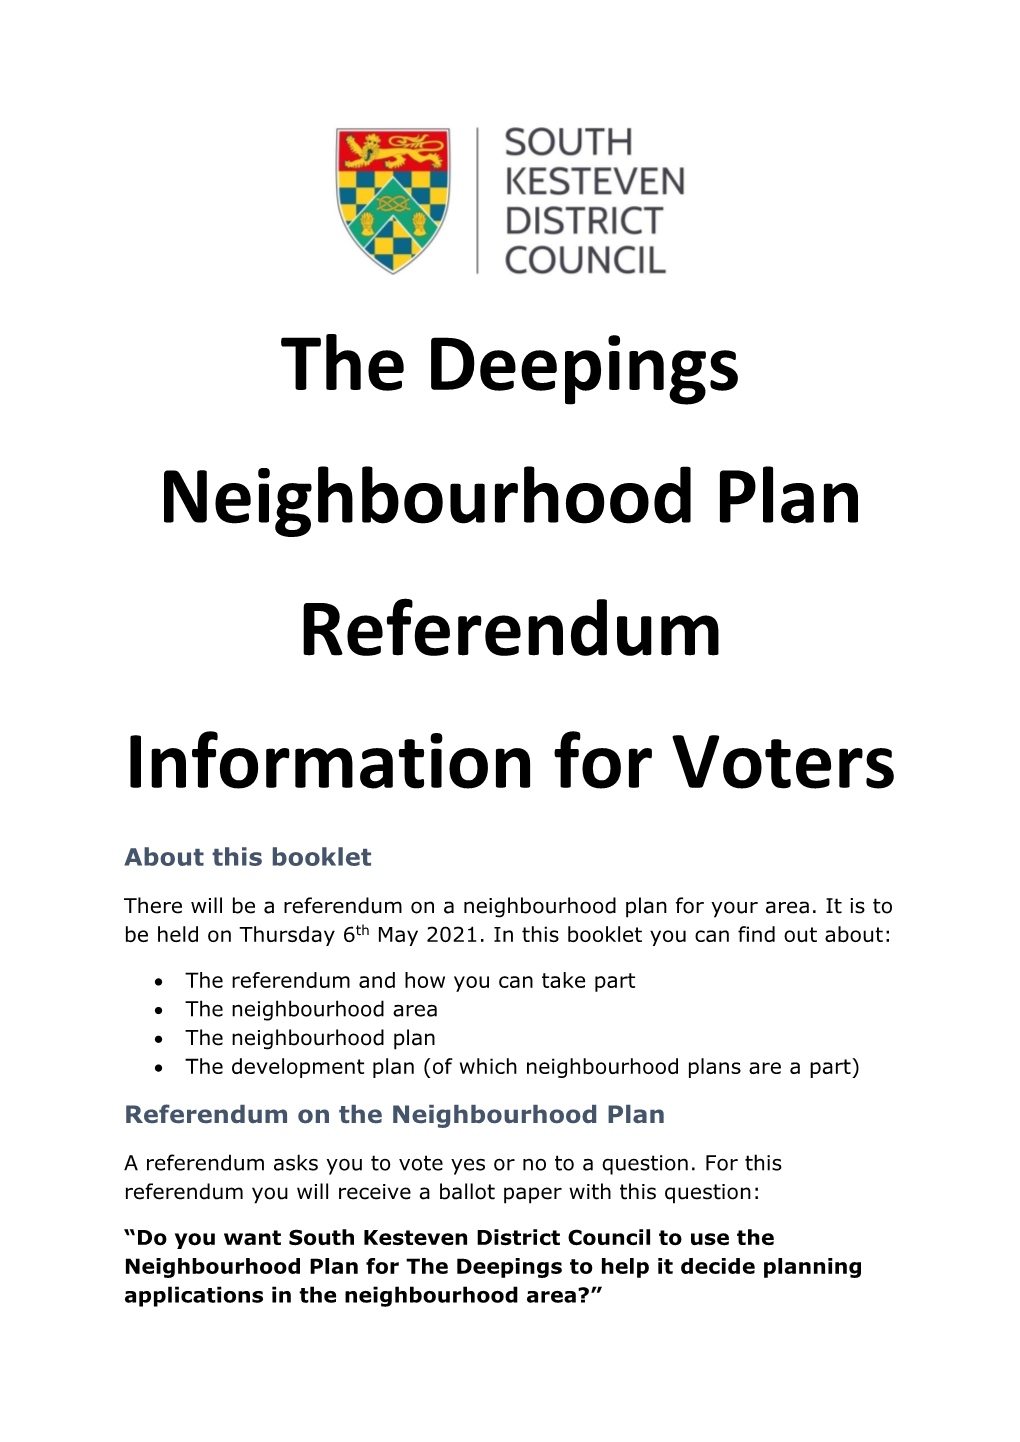 The Deepings Neighbourhood Plan Referendum Information for Voters